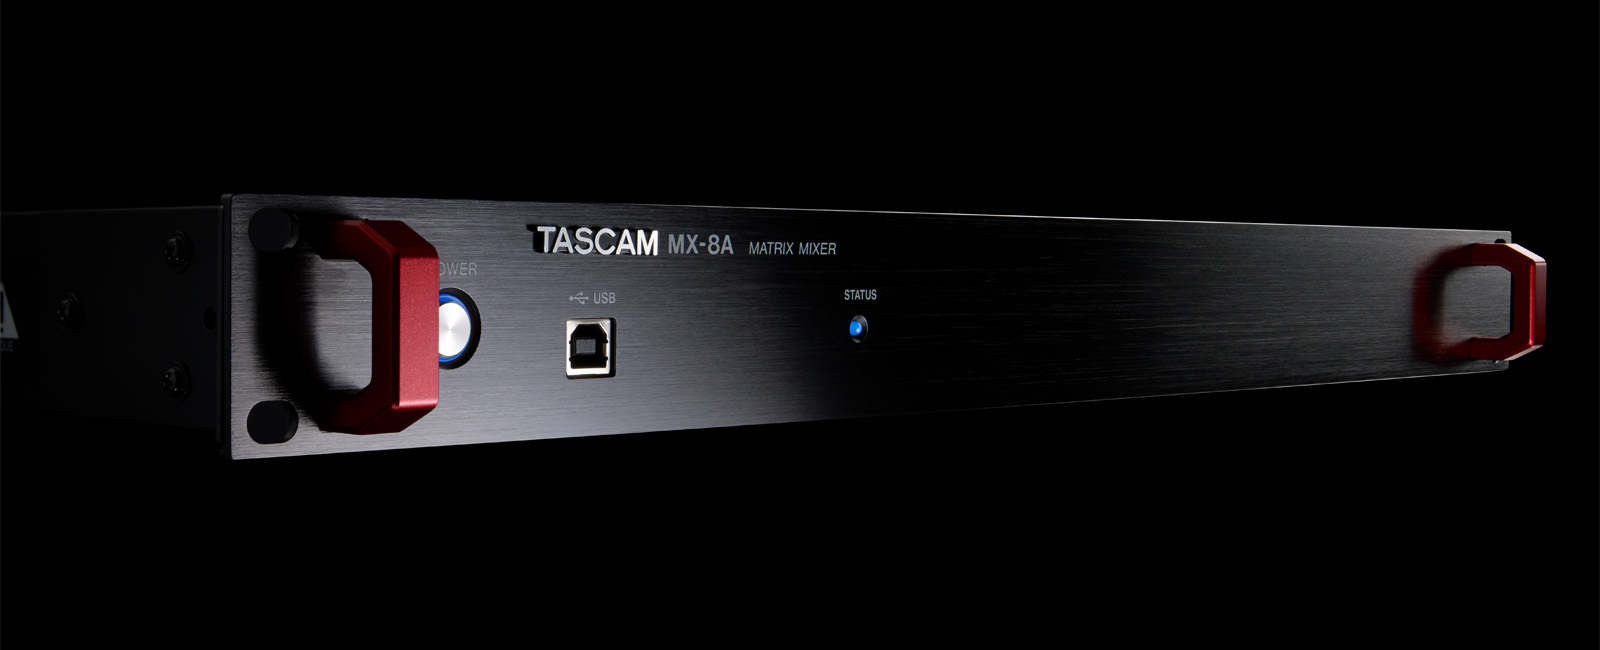 New TASCAM MX-8A Matrix Mixer Perfect for Multi-Zone Installs